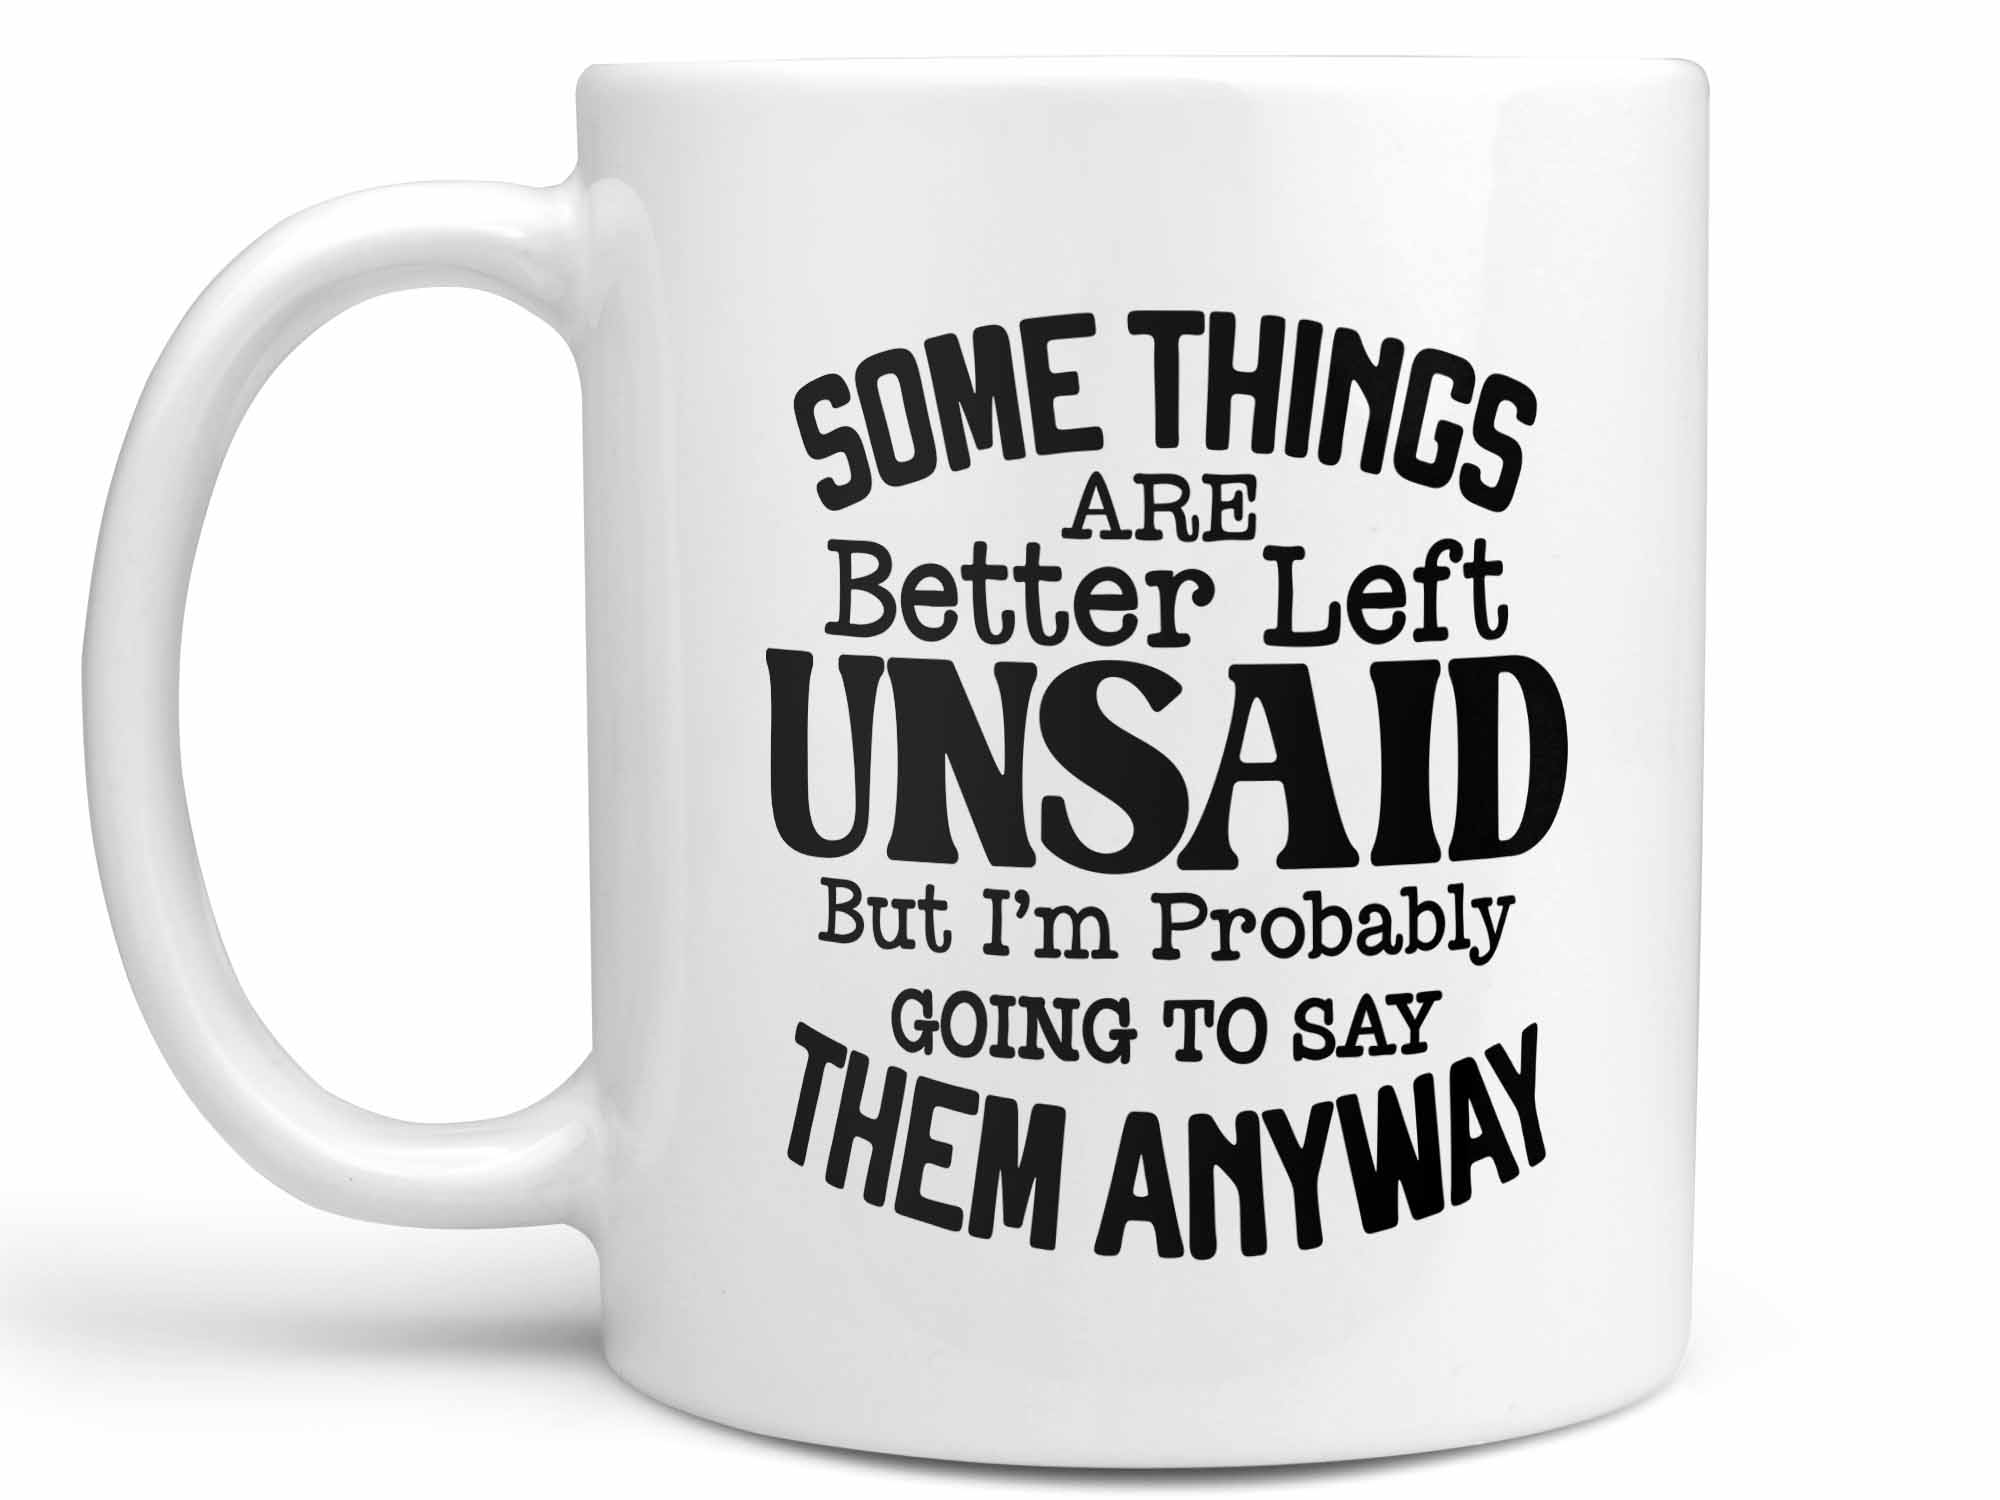 Better Left Unsaid Coffee Mug